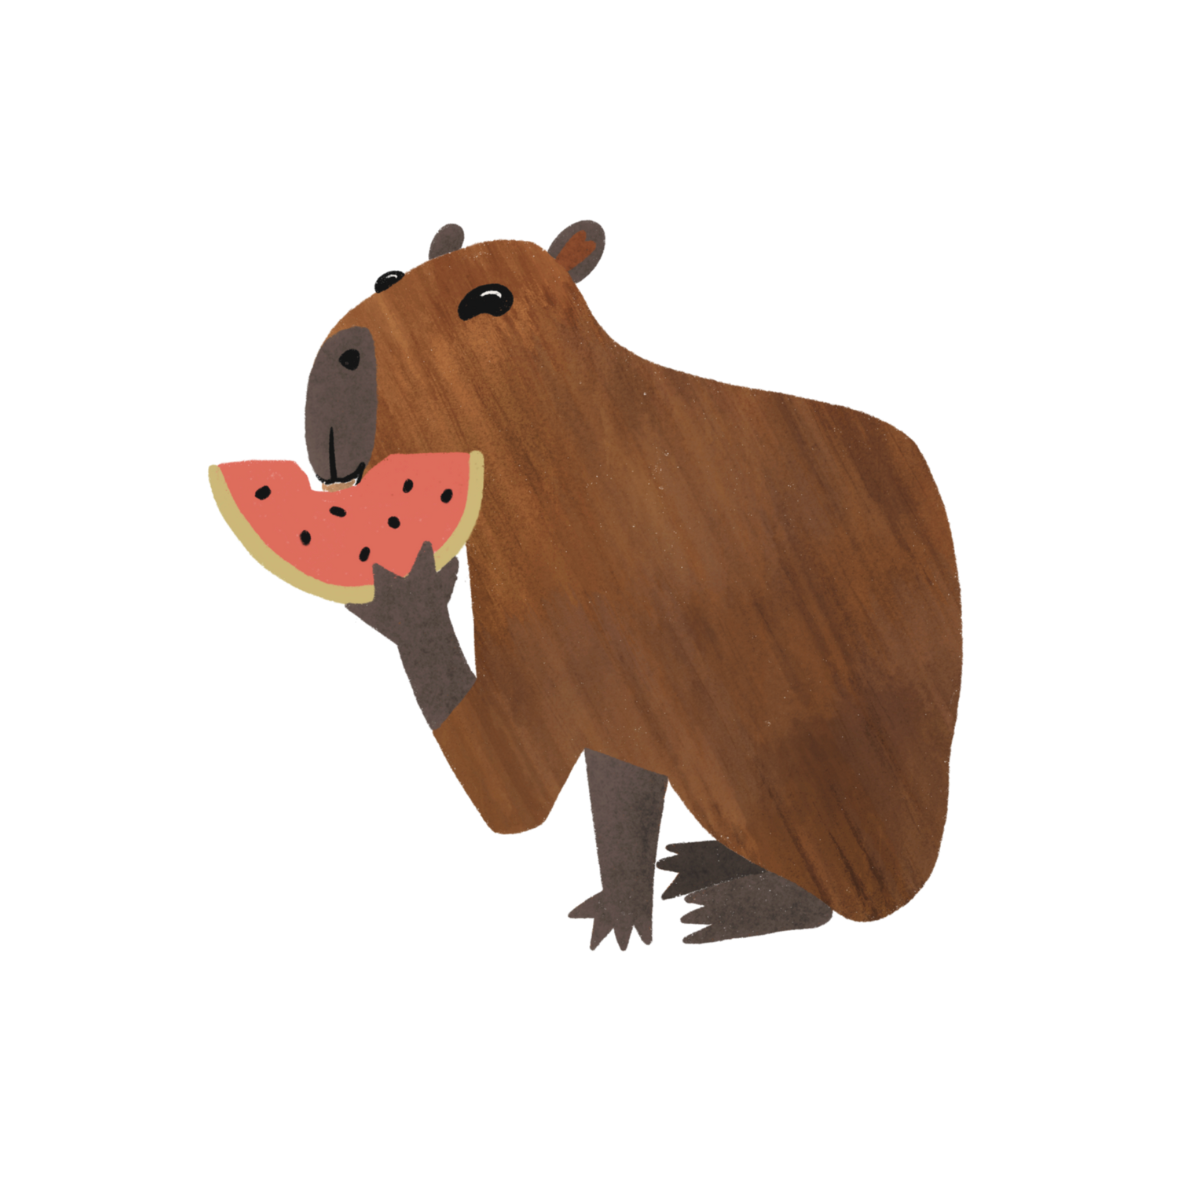 a friendly-looking capybara eating a watermelon slice